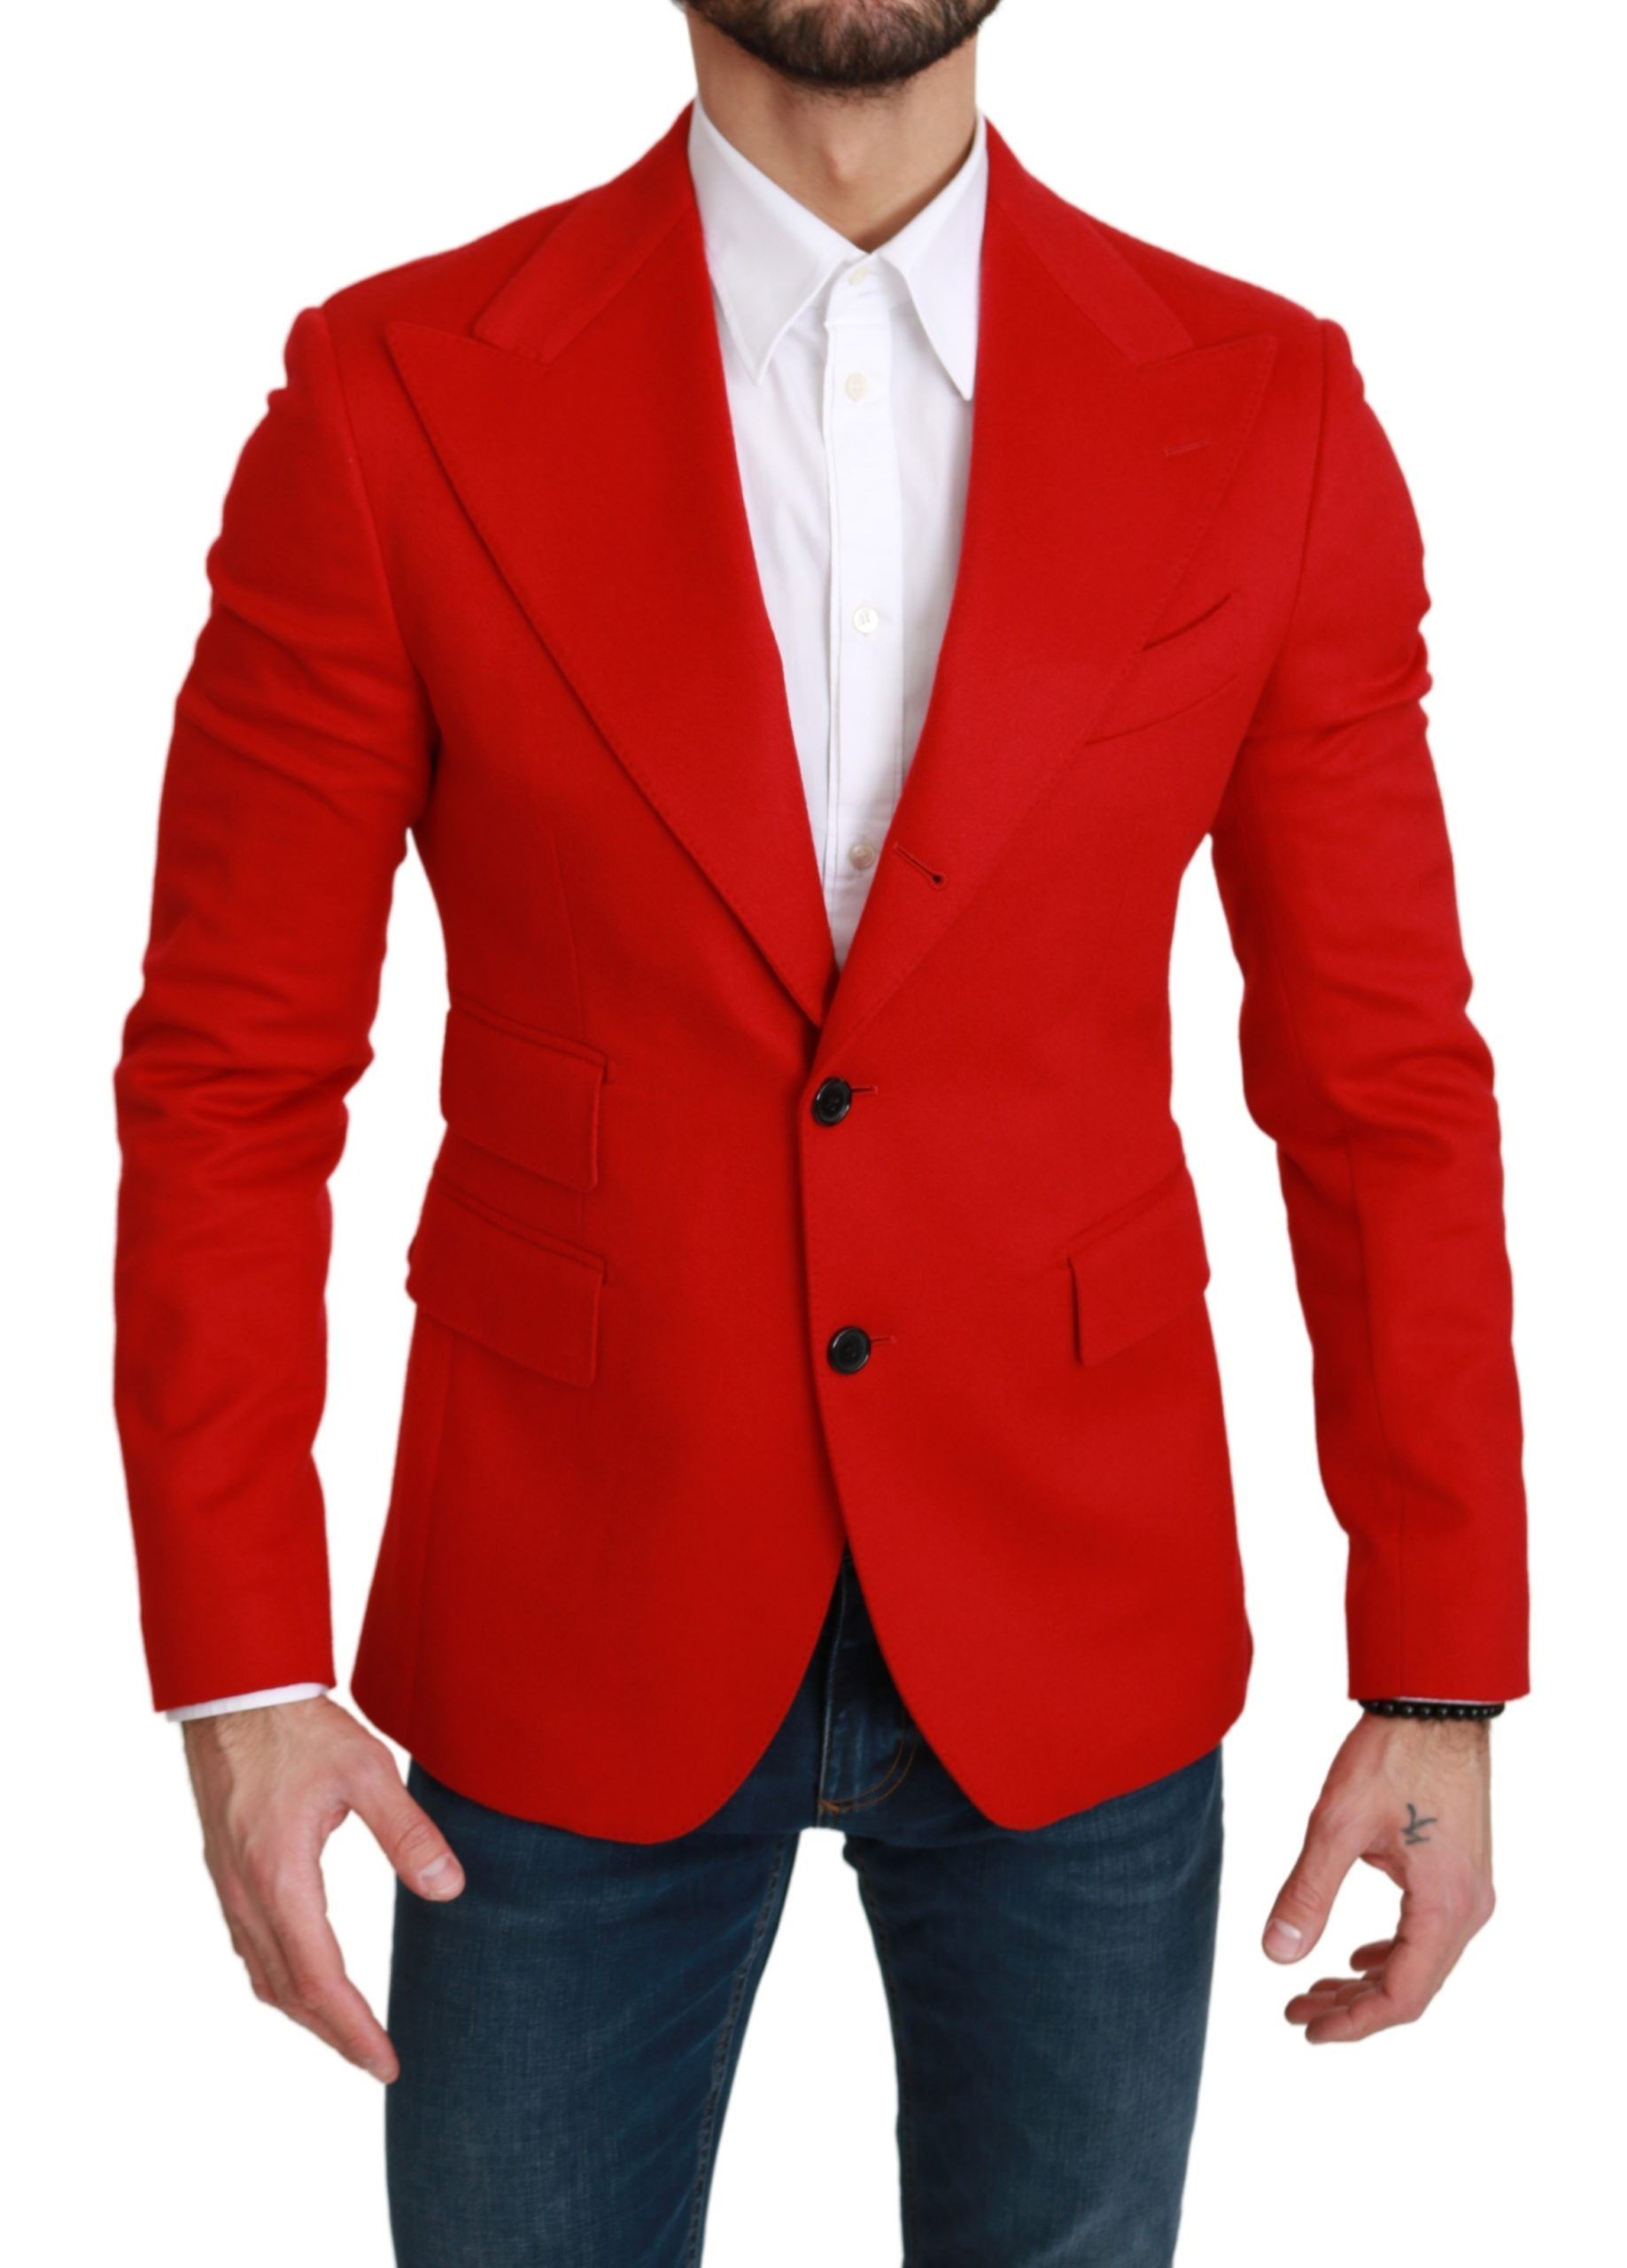 Dolce & Gabbana Red Cashmere Slim Fit Coat Jacket Blazer